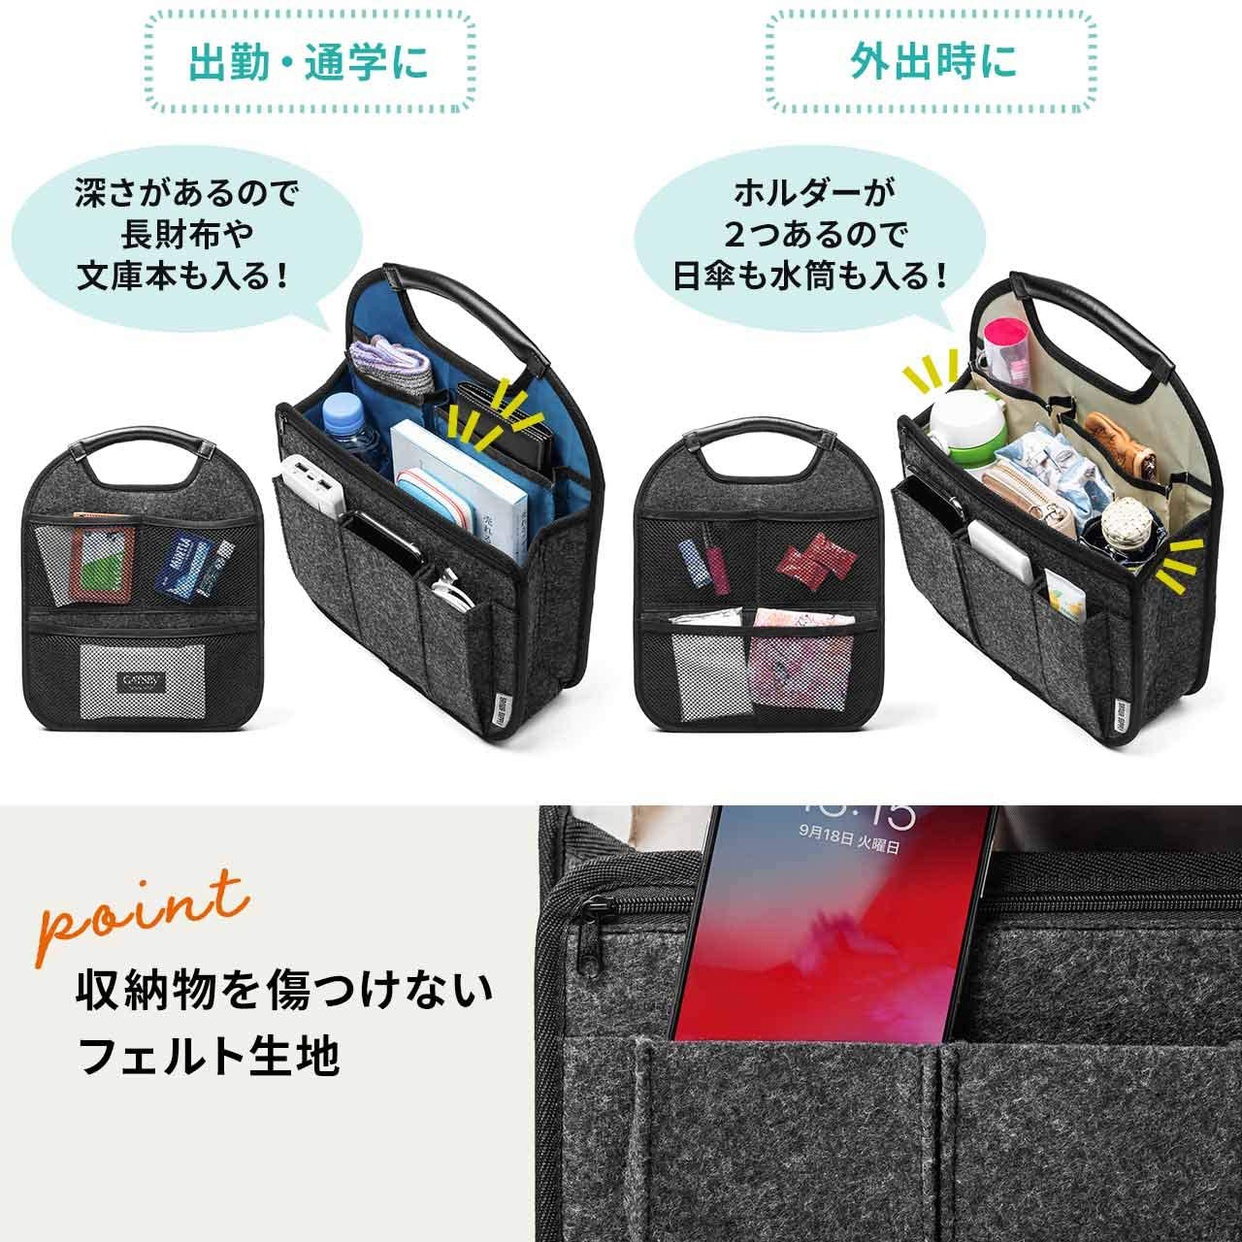 SANWA SUPPLY(サンワサプライ) バッグインバッグ 200-BAGIN017の商品画像6 